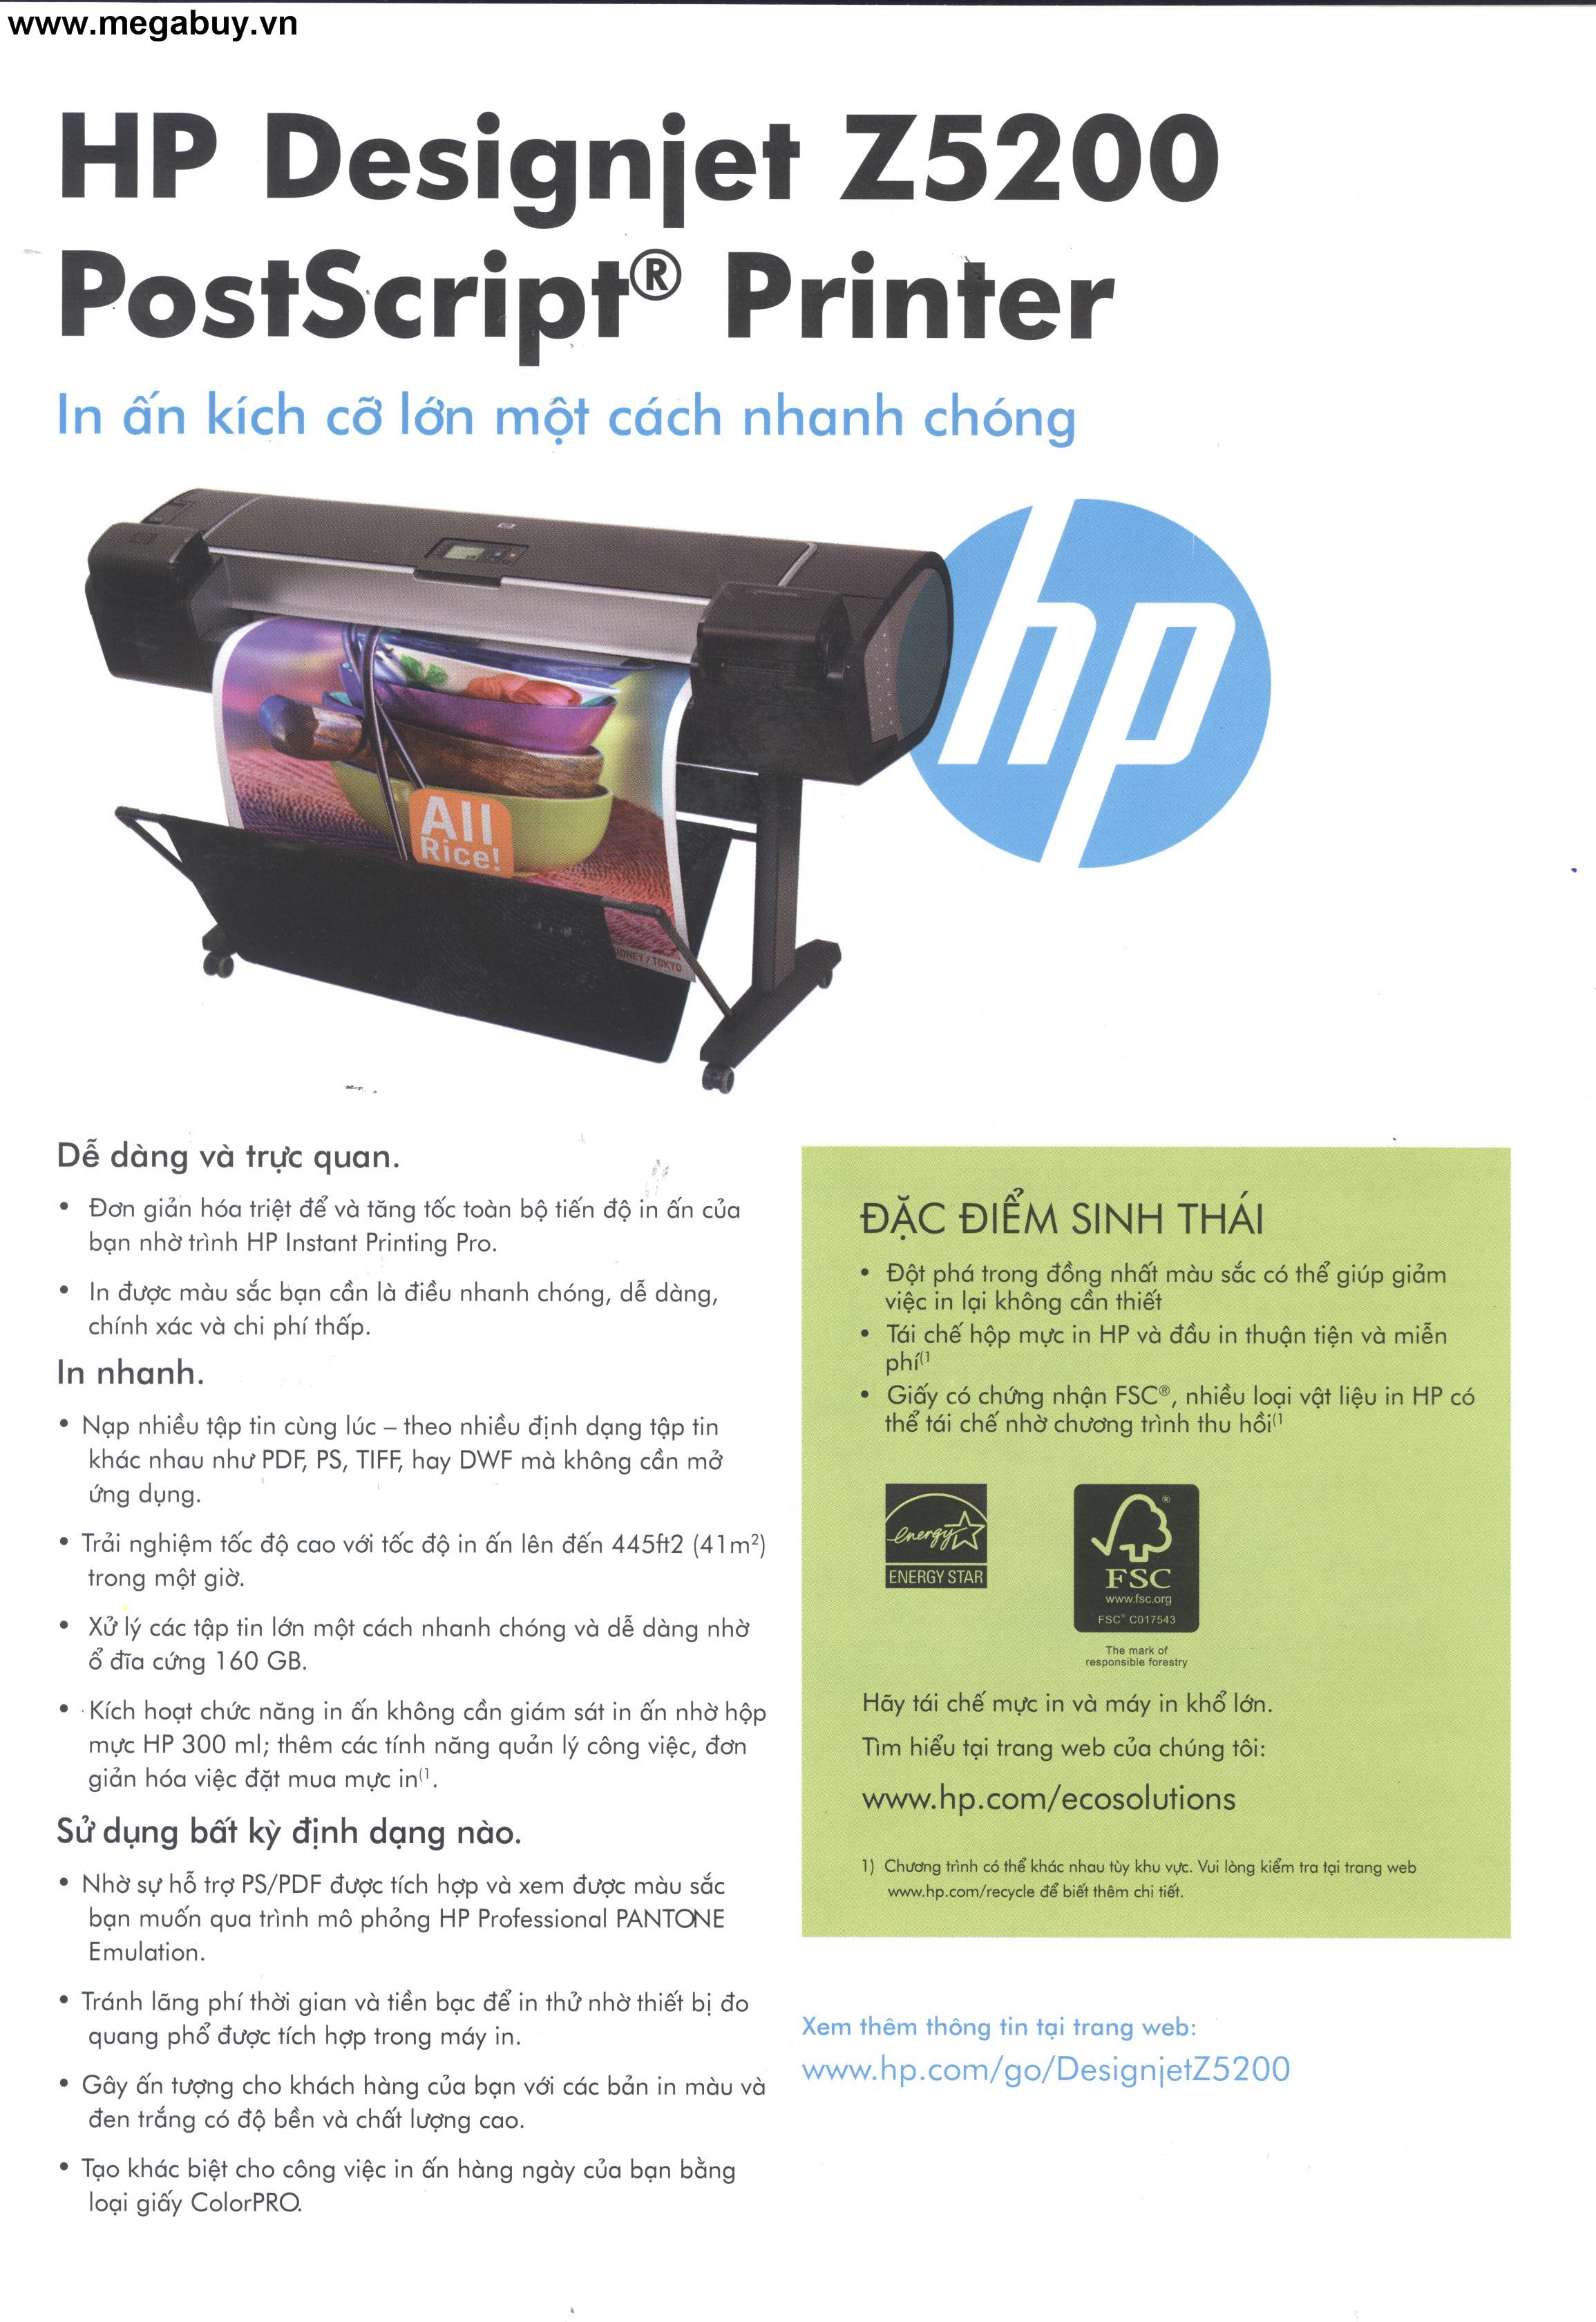 Máy in khổ rộng HP Designjet Z5200 PostScript Printer